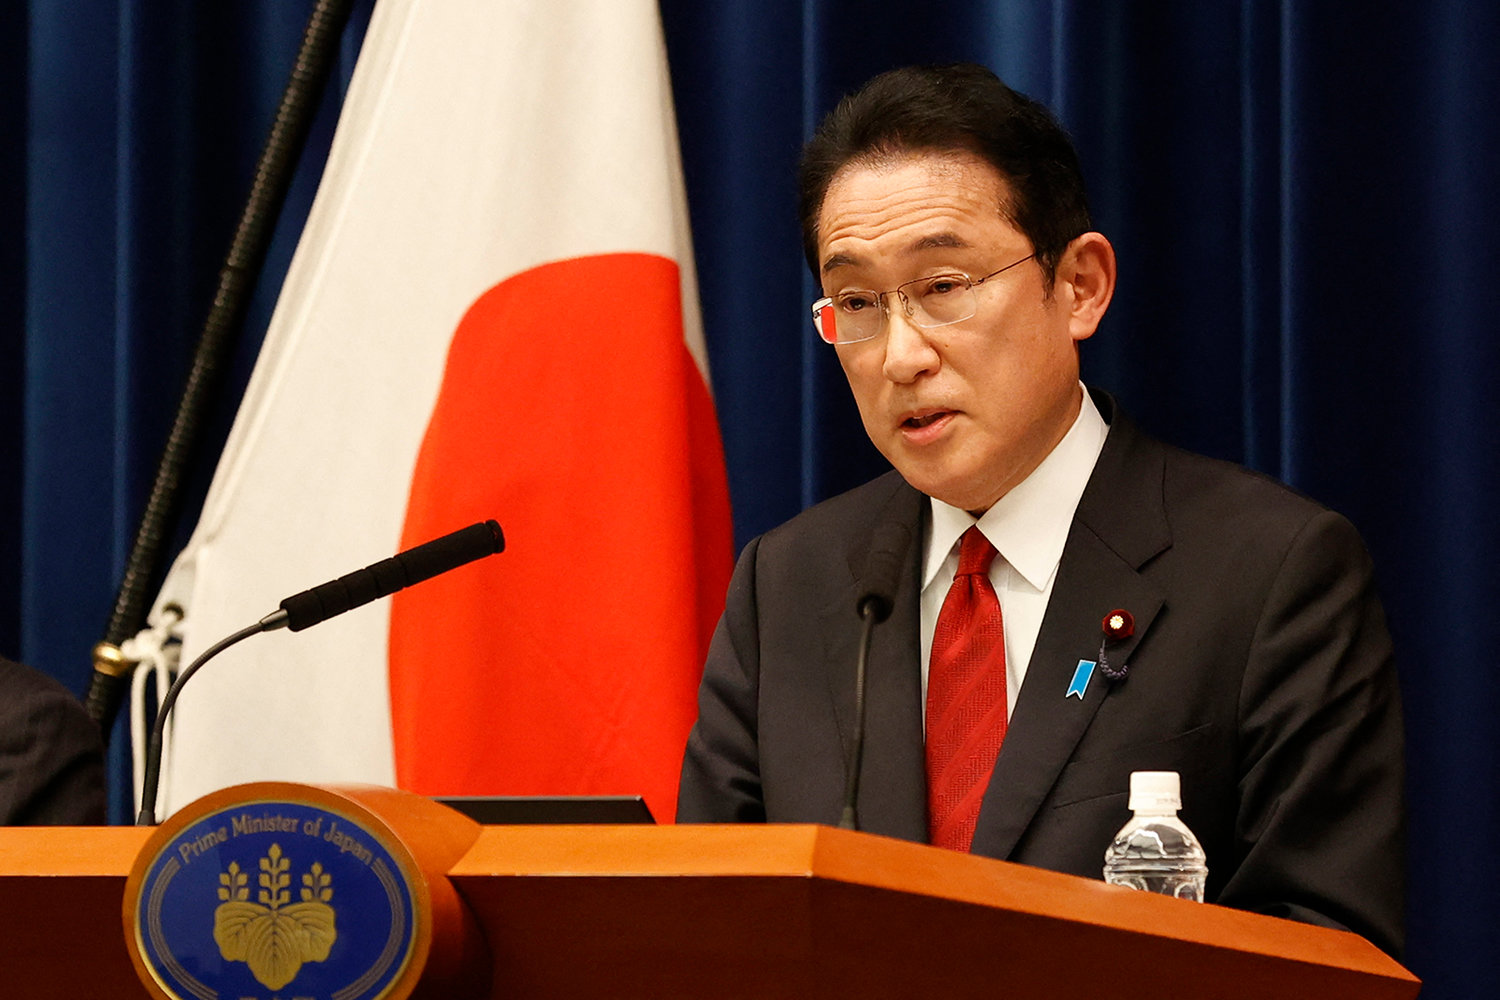 Japan's Prime Minister Fumio Kishida speaks during a press conference in Tokyo on April 8, 2022. (Rodrigo Reyes Marin/Pool/AFP via Getty Images/TNS)